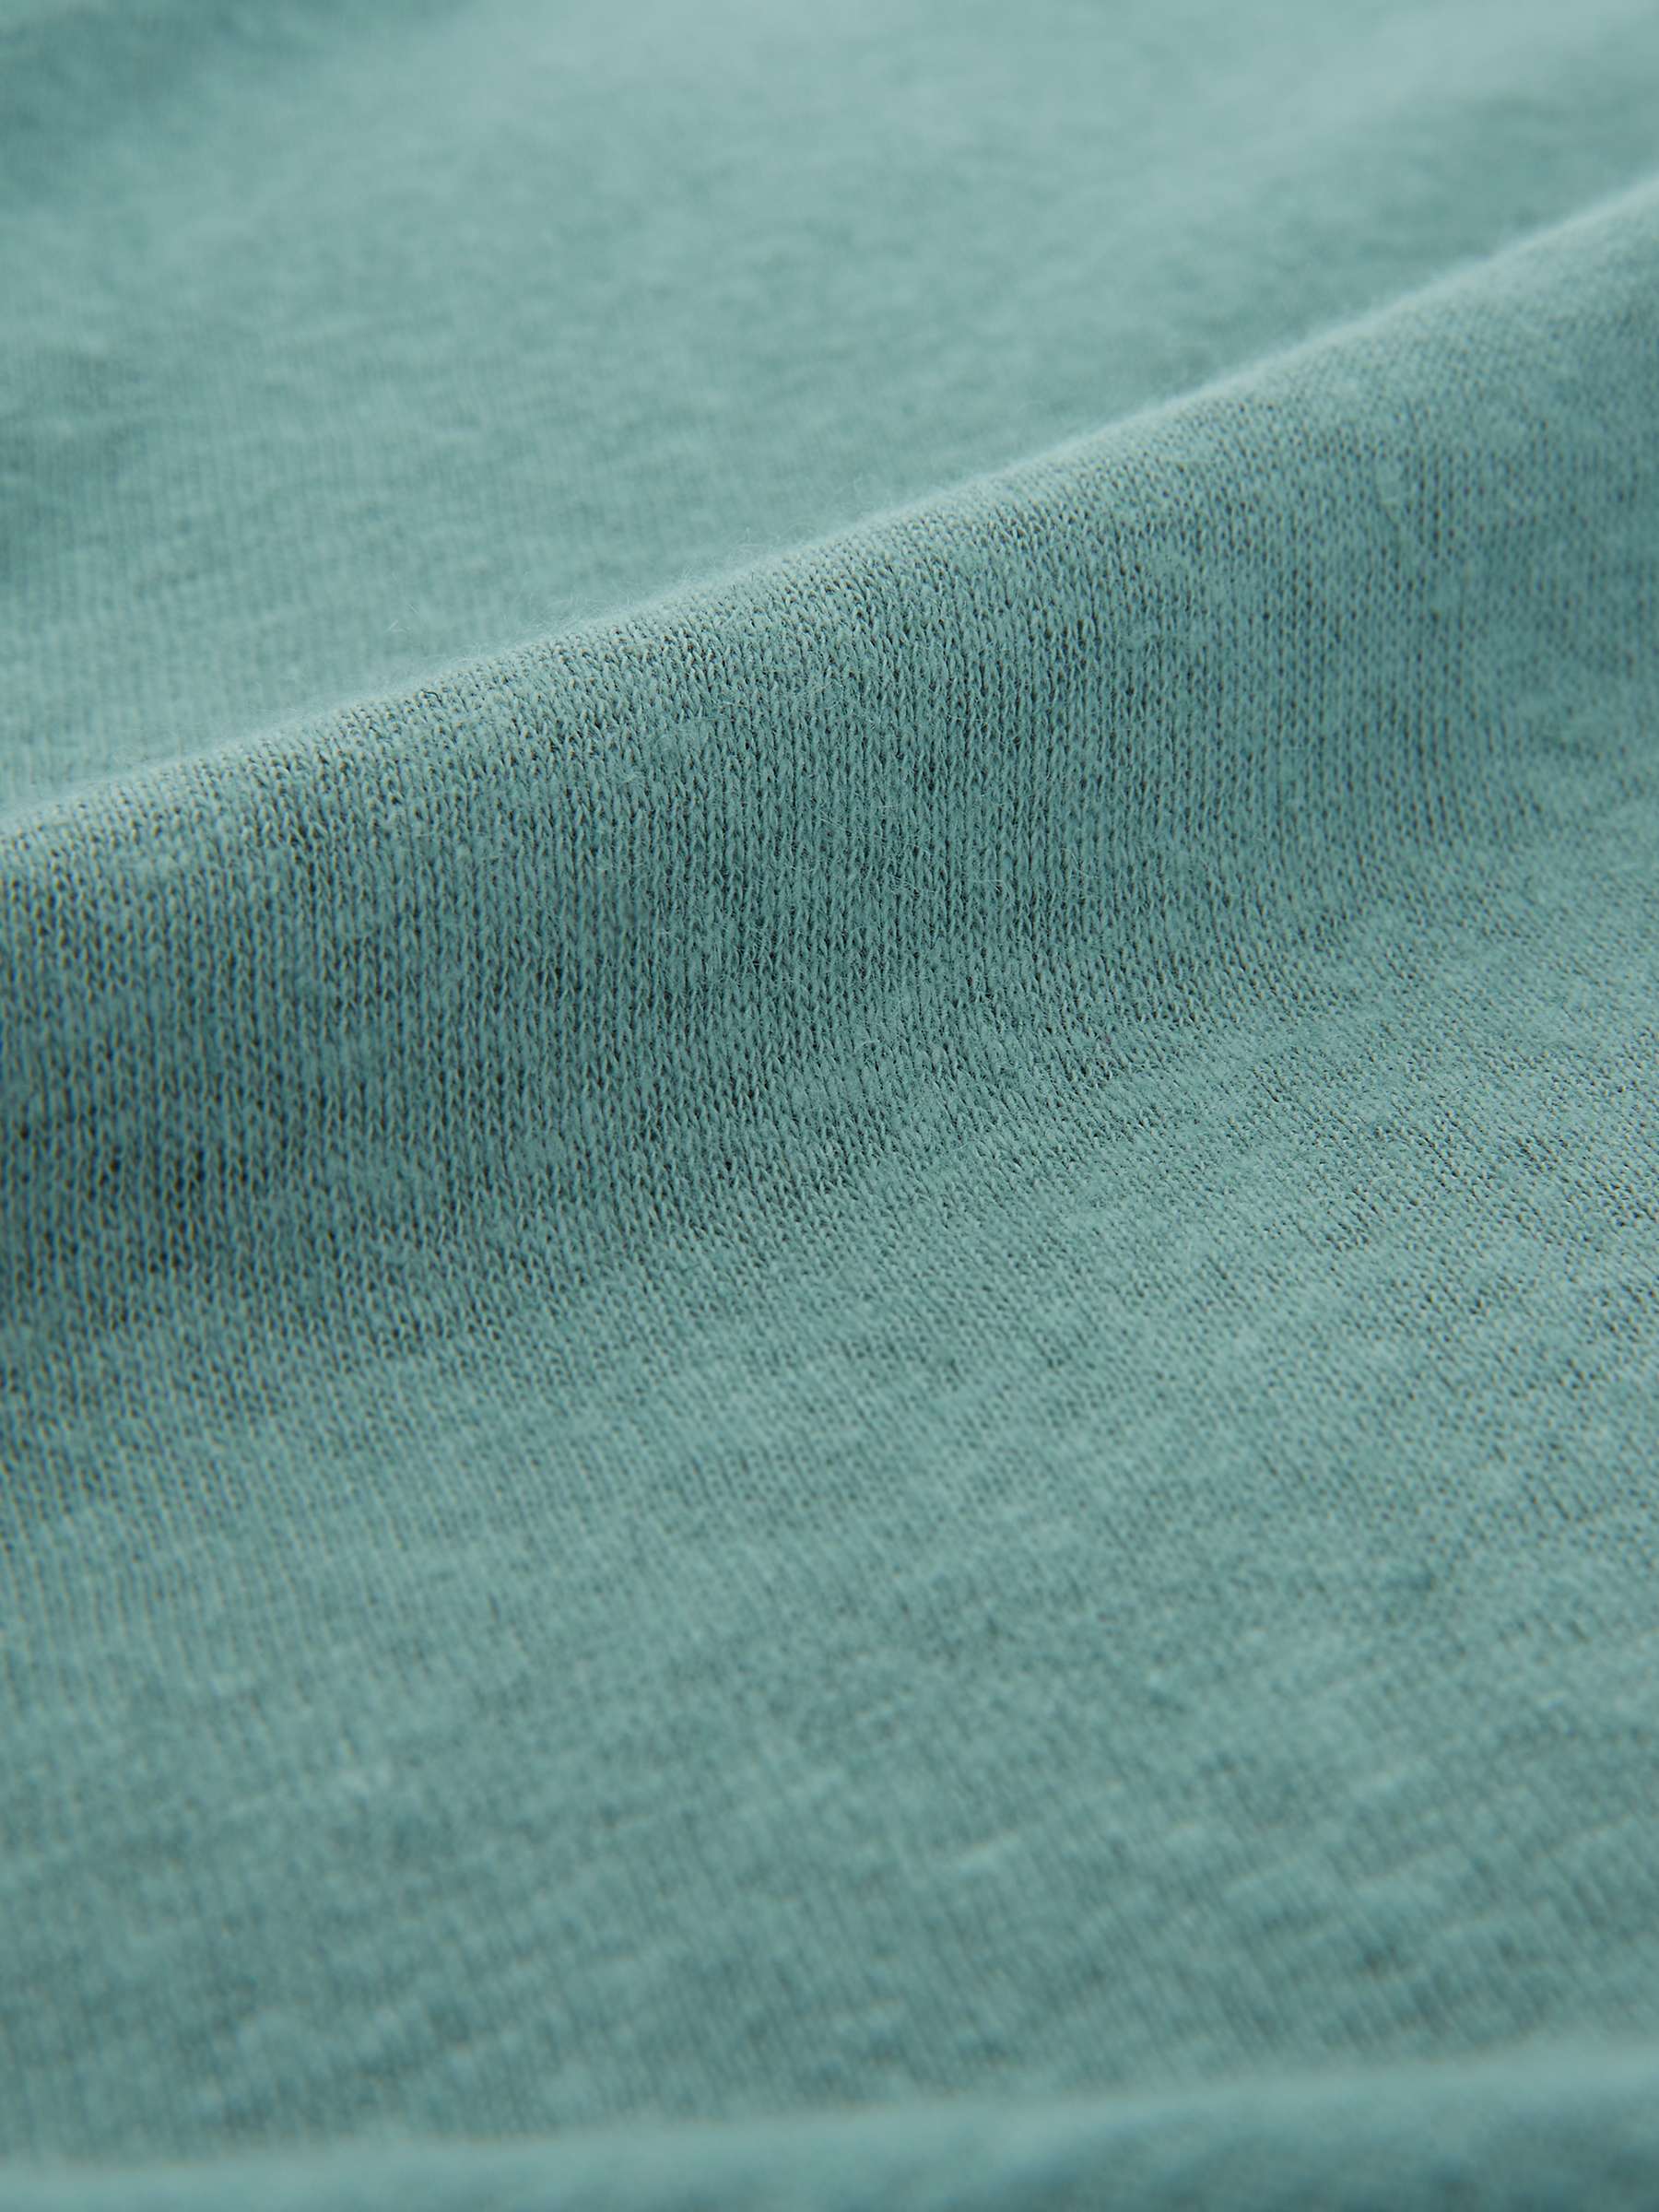 Buy Celtic & Co. Linen Half Sleeve Sweatshirt, Sage Online at johnlewis.com